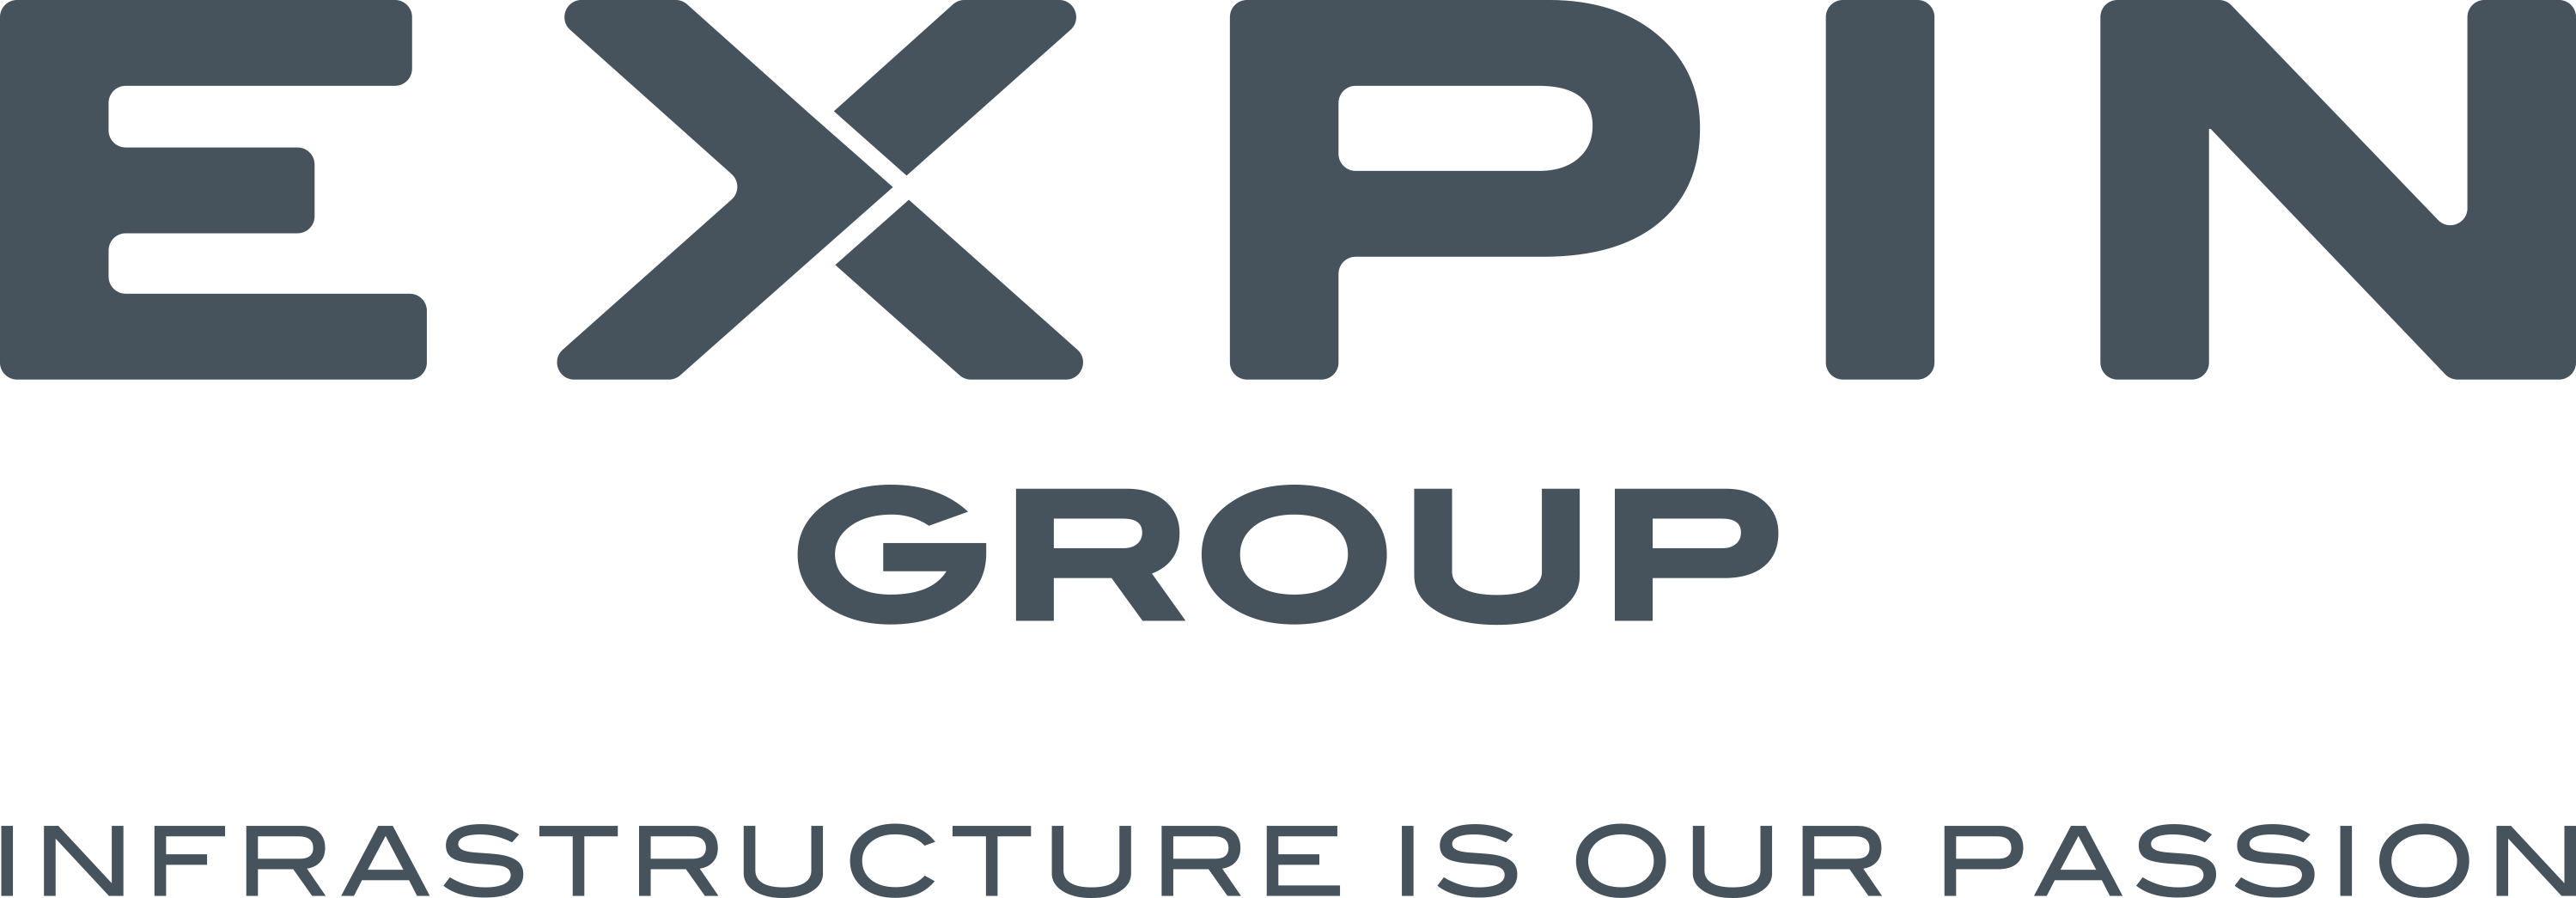 EXPIN logo grå tagline_RGB